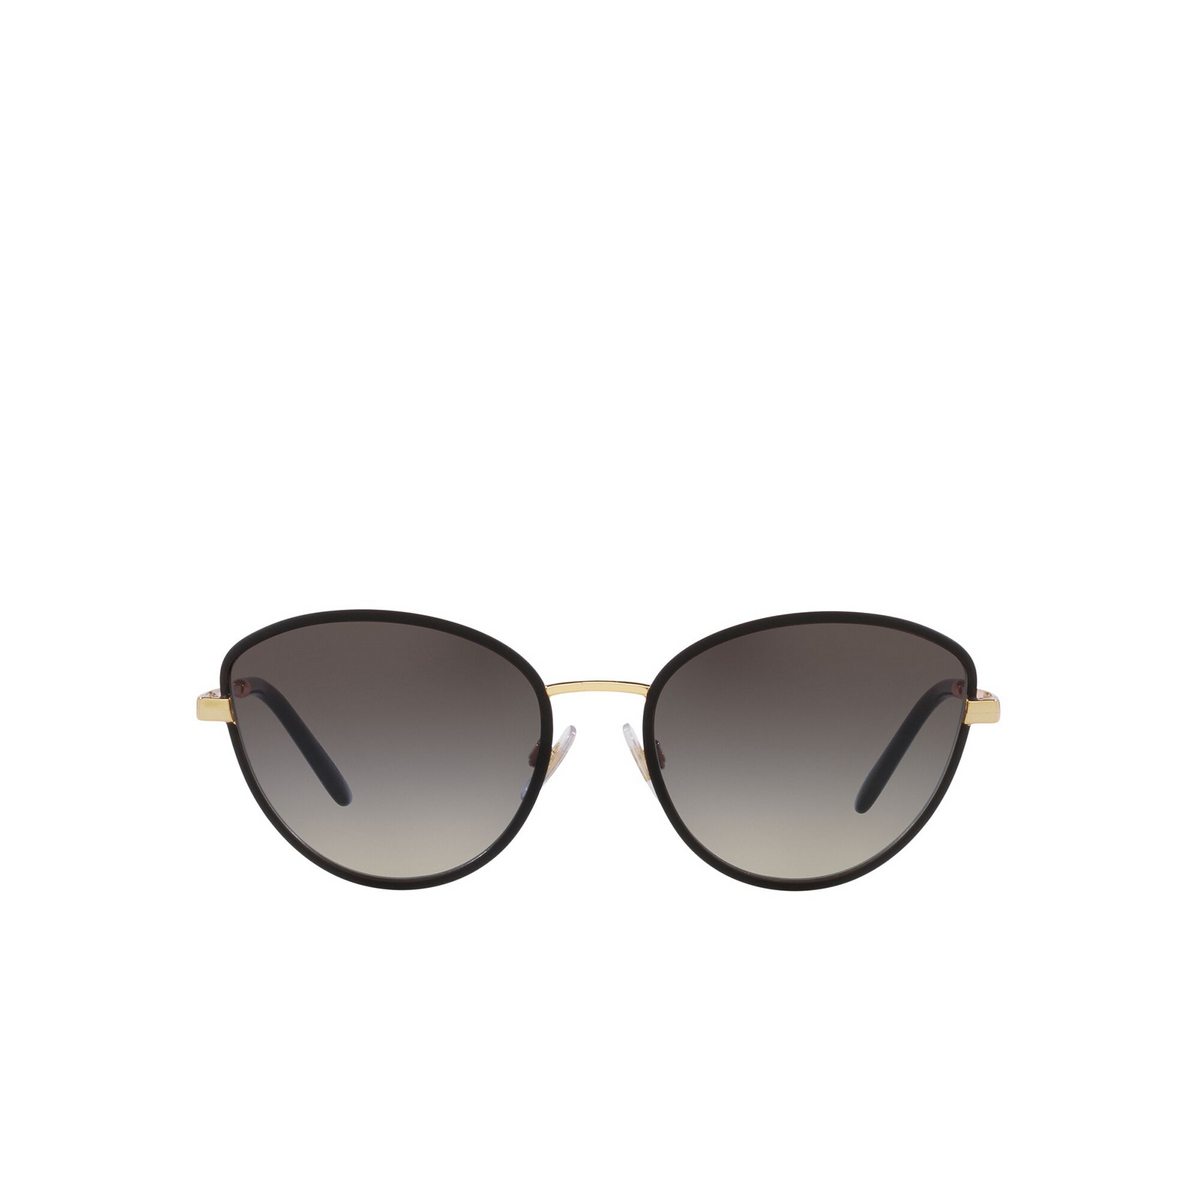 Dolce & Gabbana® Butterfly Sunglasses: DG2280 color Gold / Matte Black 13118G - front view.